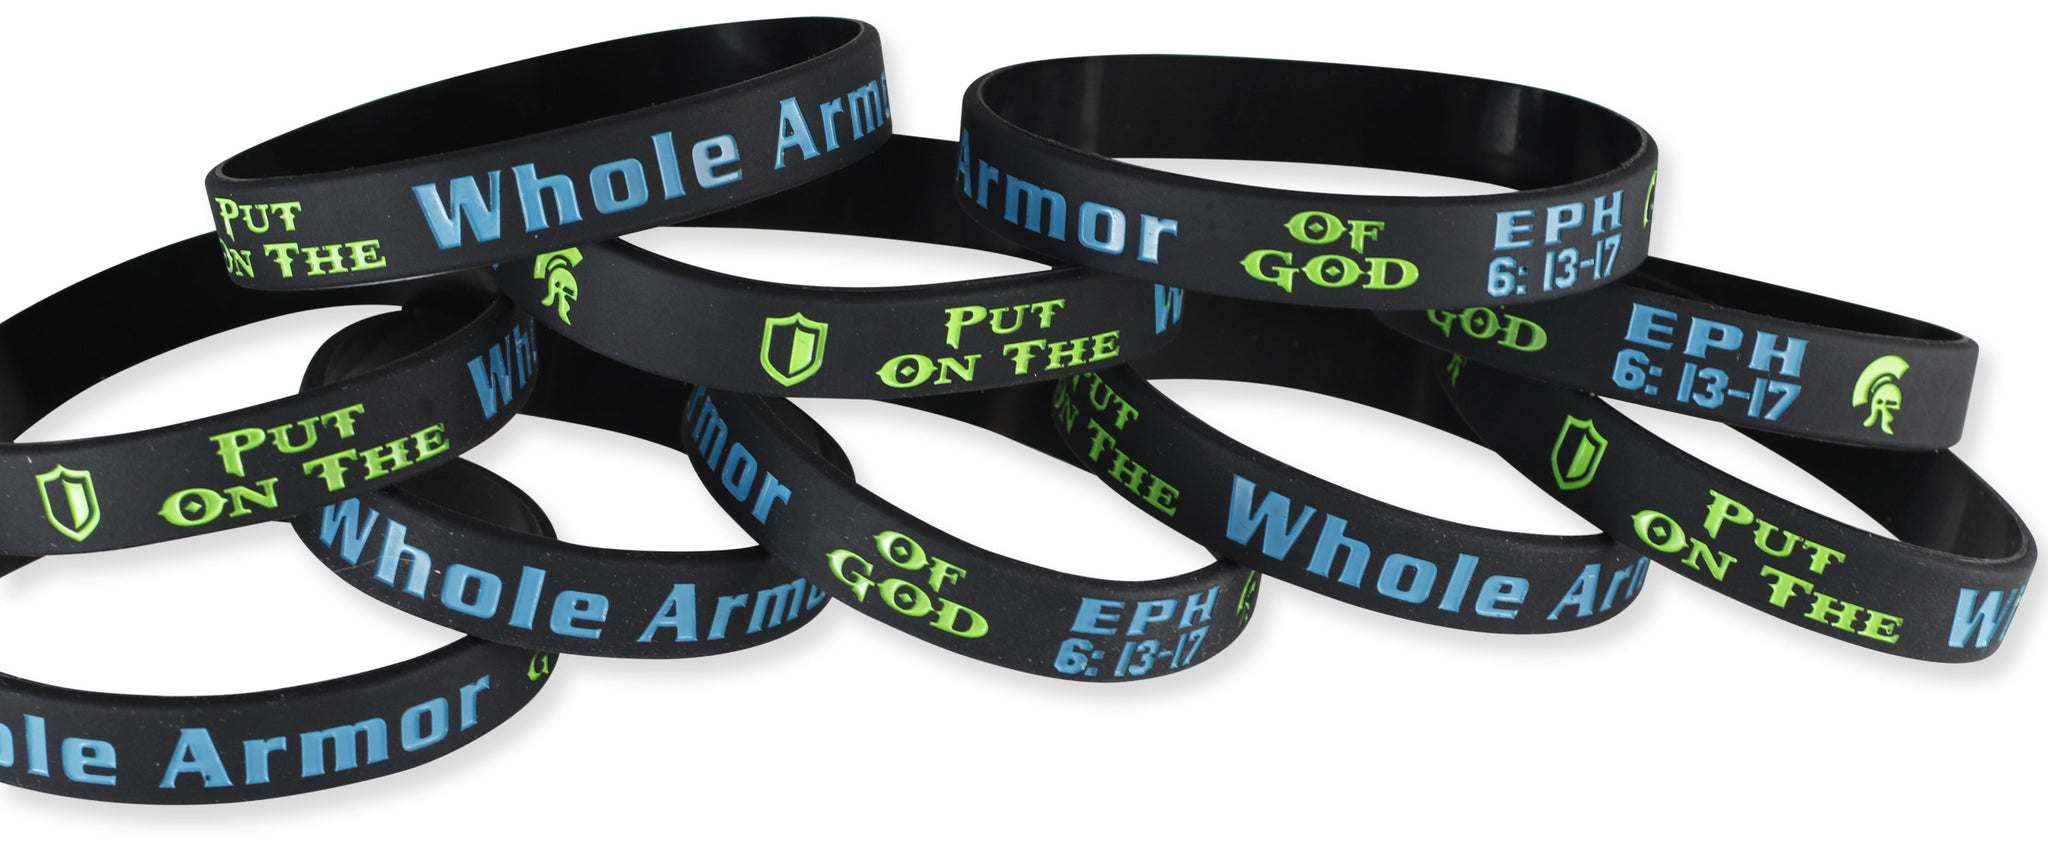 ARMOR OF GOD Green Silicone Bracelets, Christian Bracelets - Pack of 12